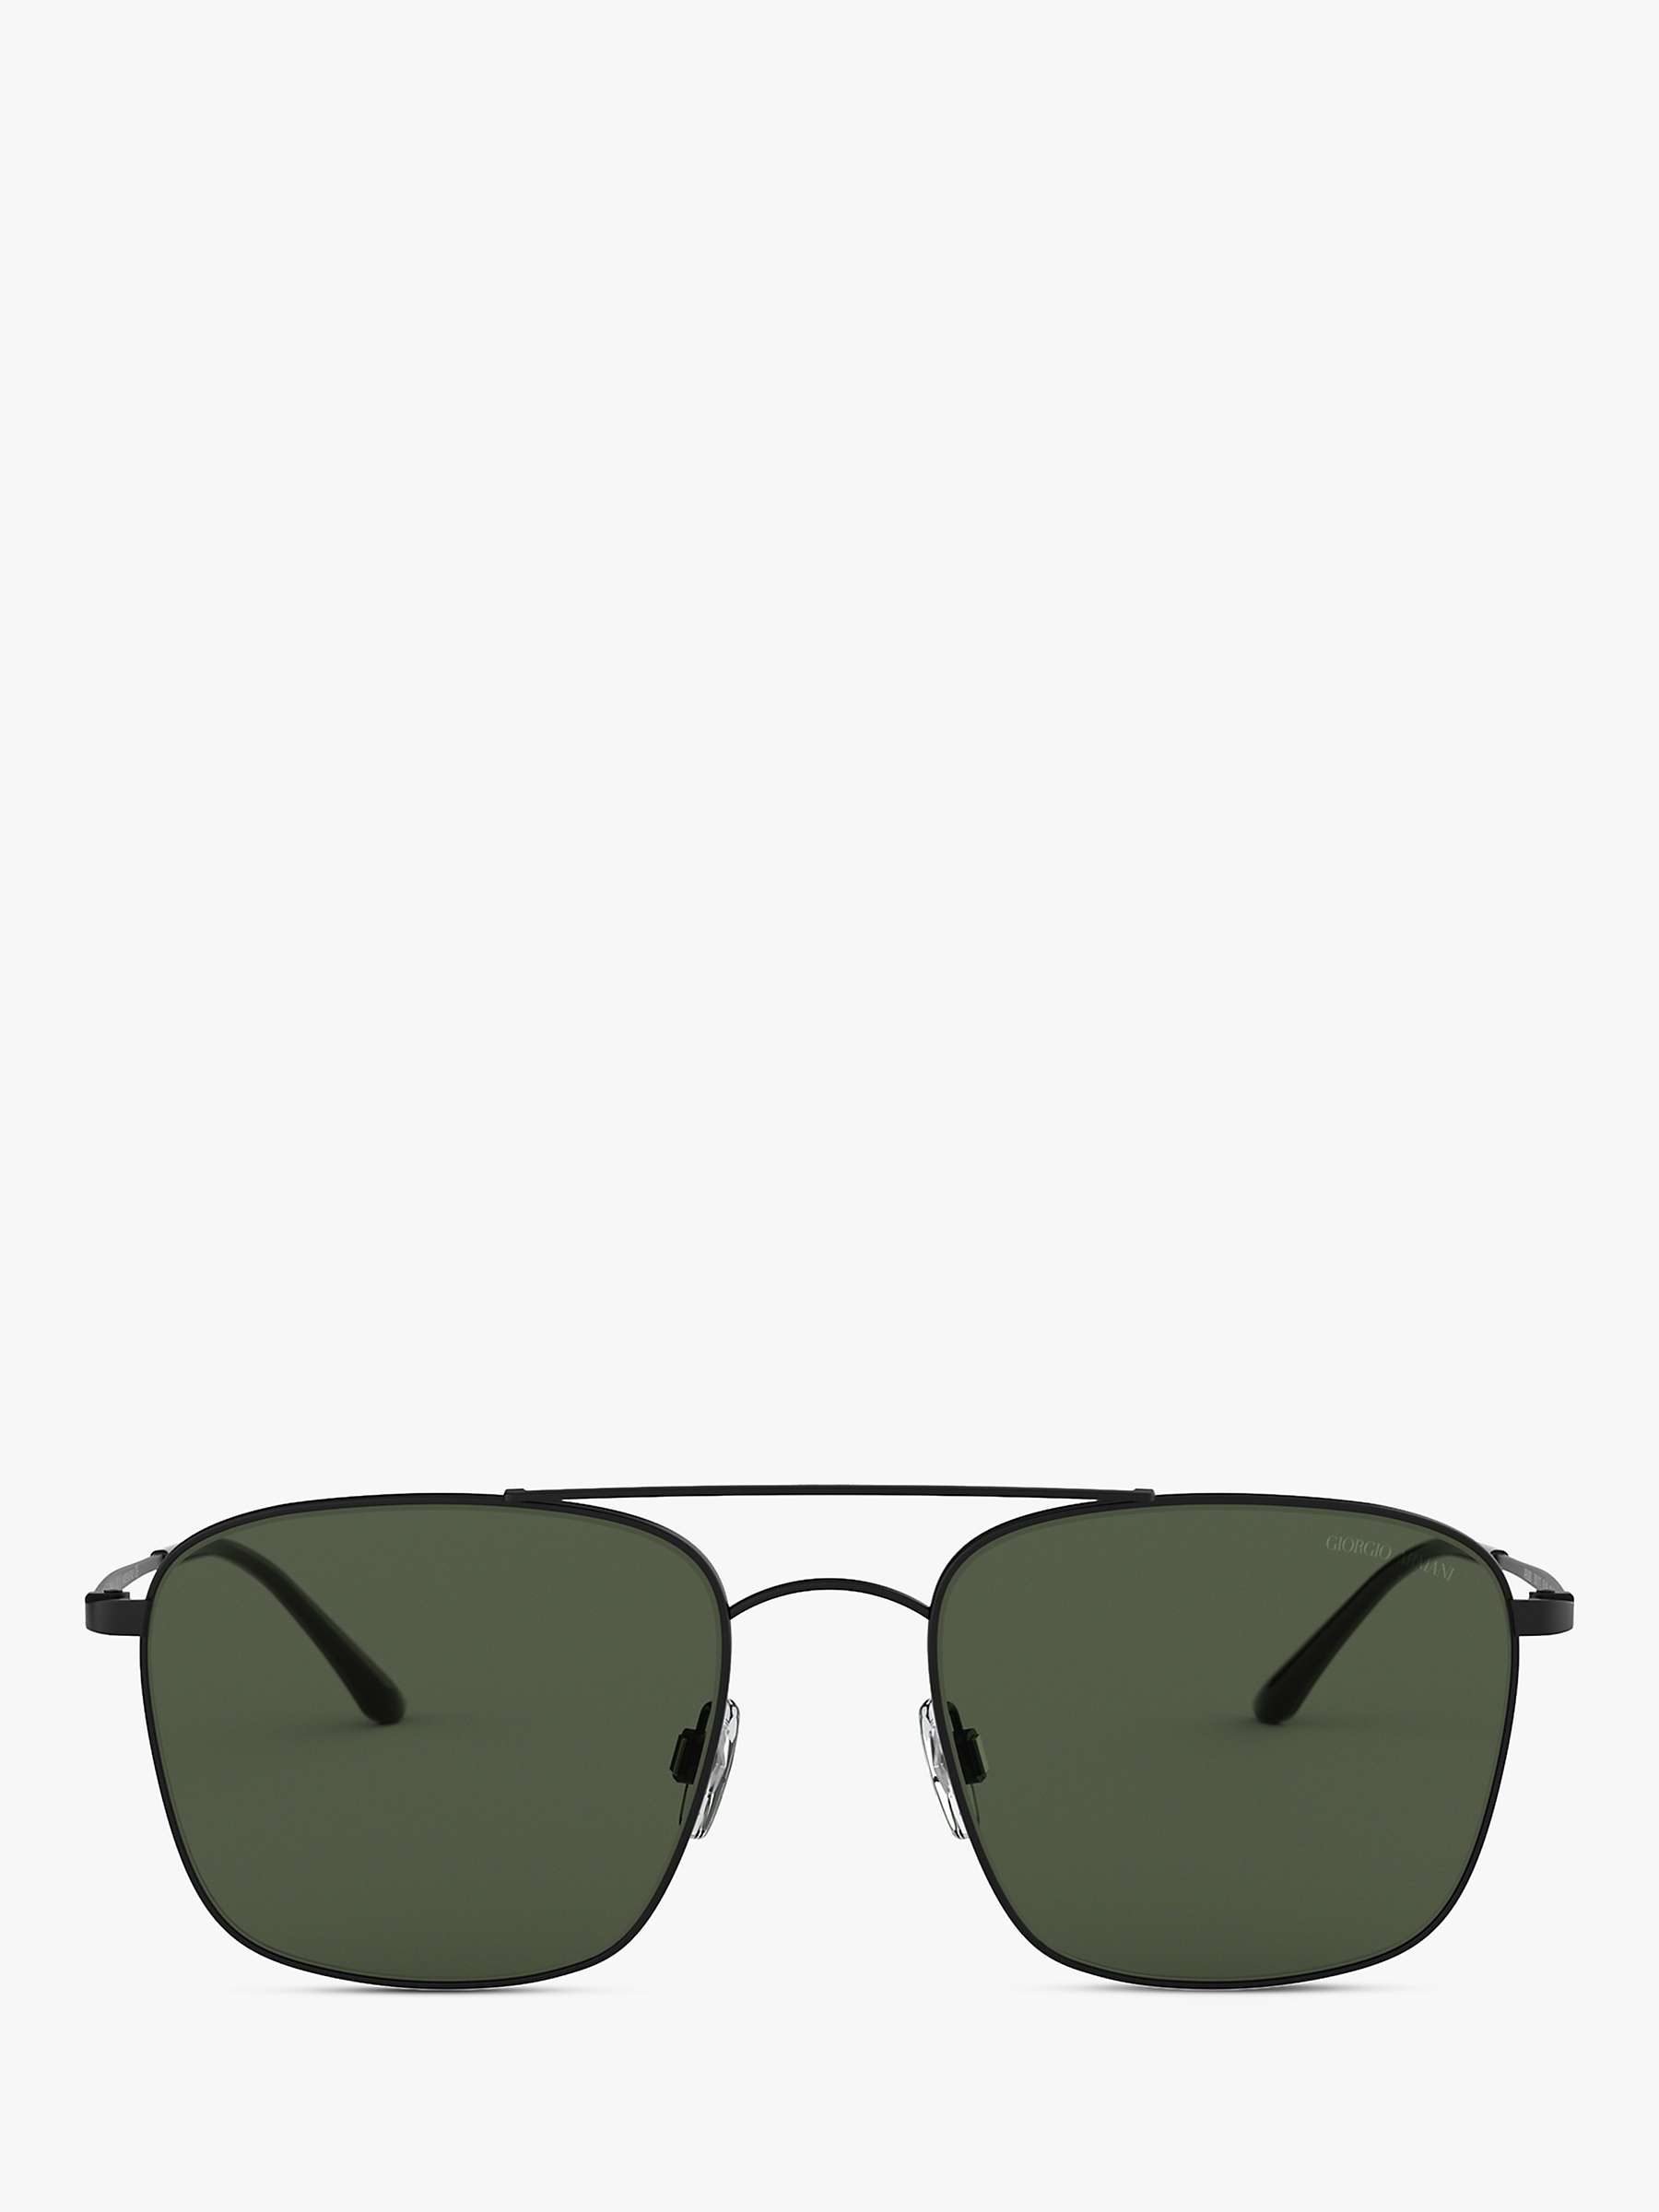 Buy Giorgio Armani AR6080 Men's Square Sunglasses Online at johnlewis.com